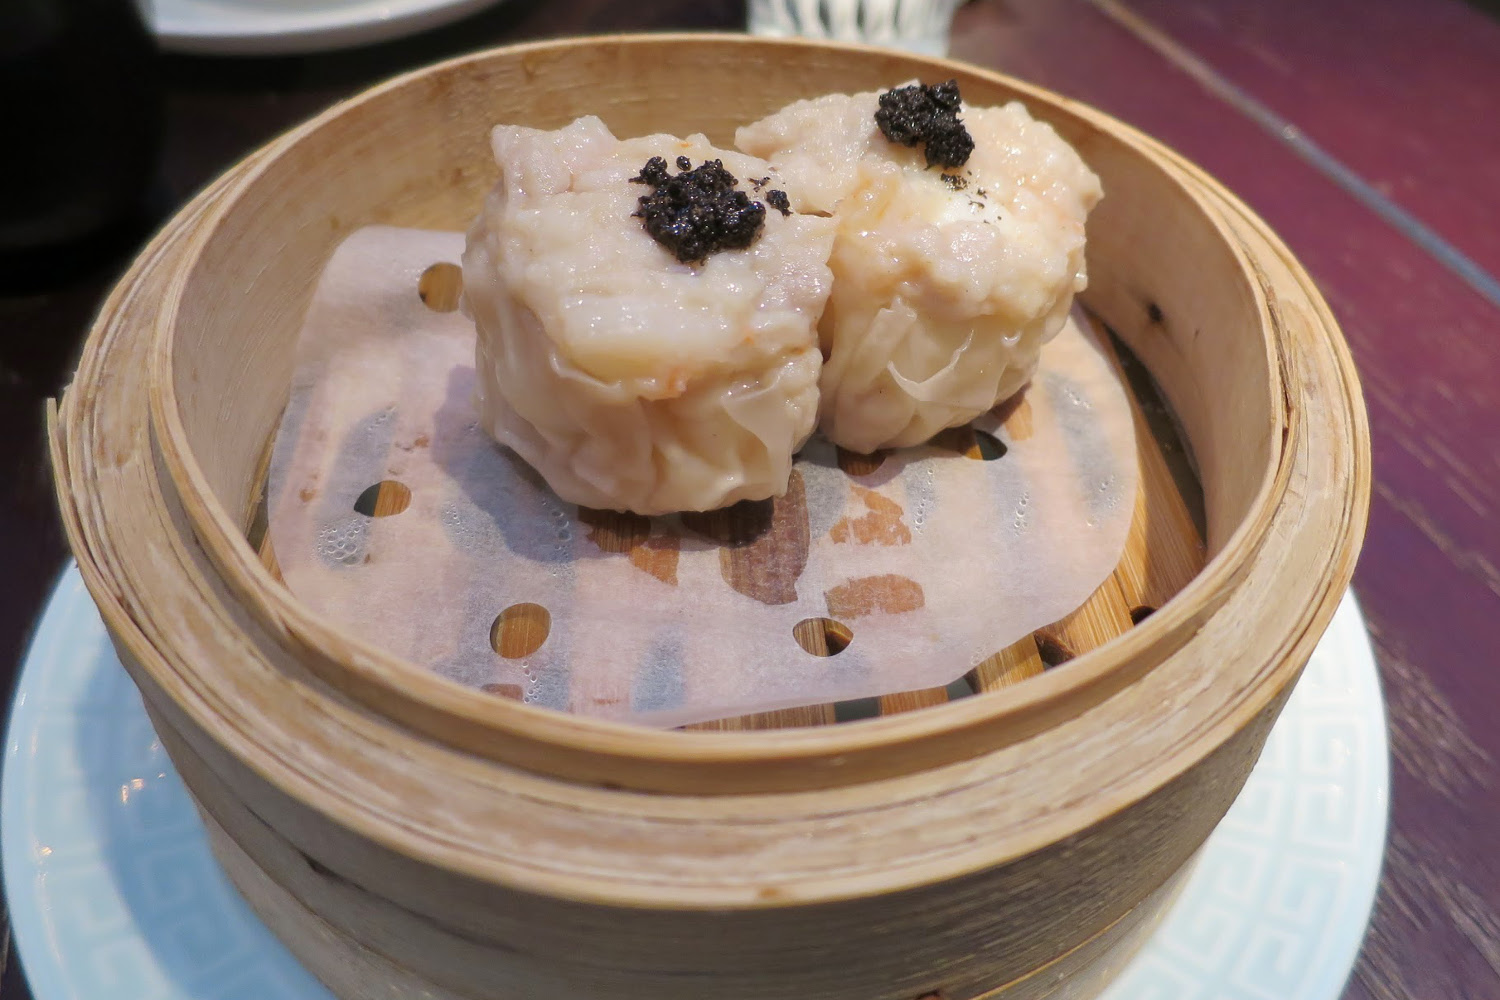 Gourmet dim sum: a Hong Kong treat. Image by Megan Eaves / londoninfopage